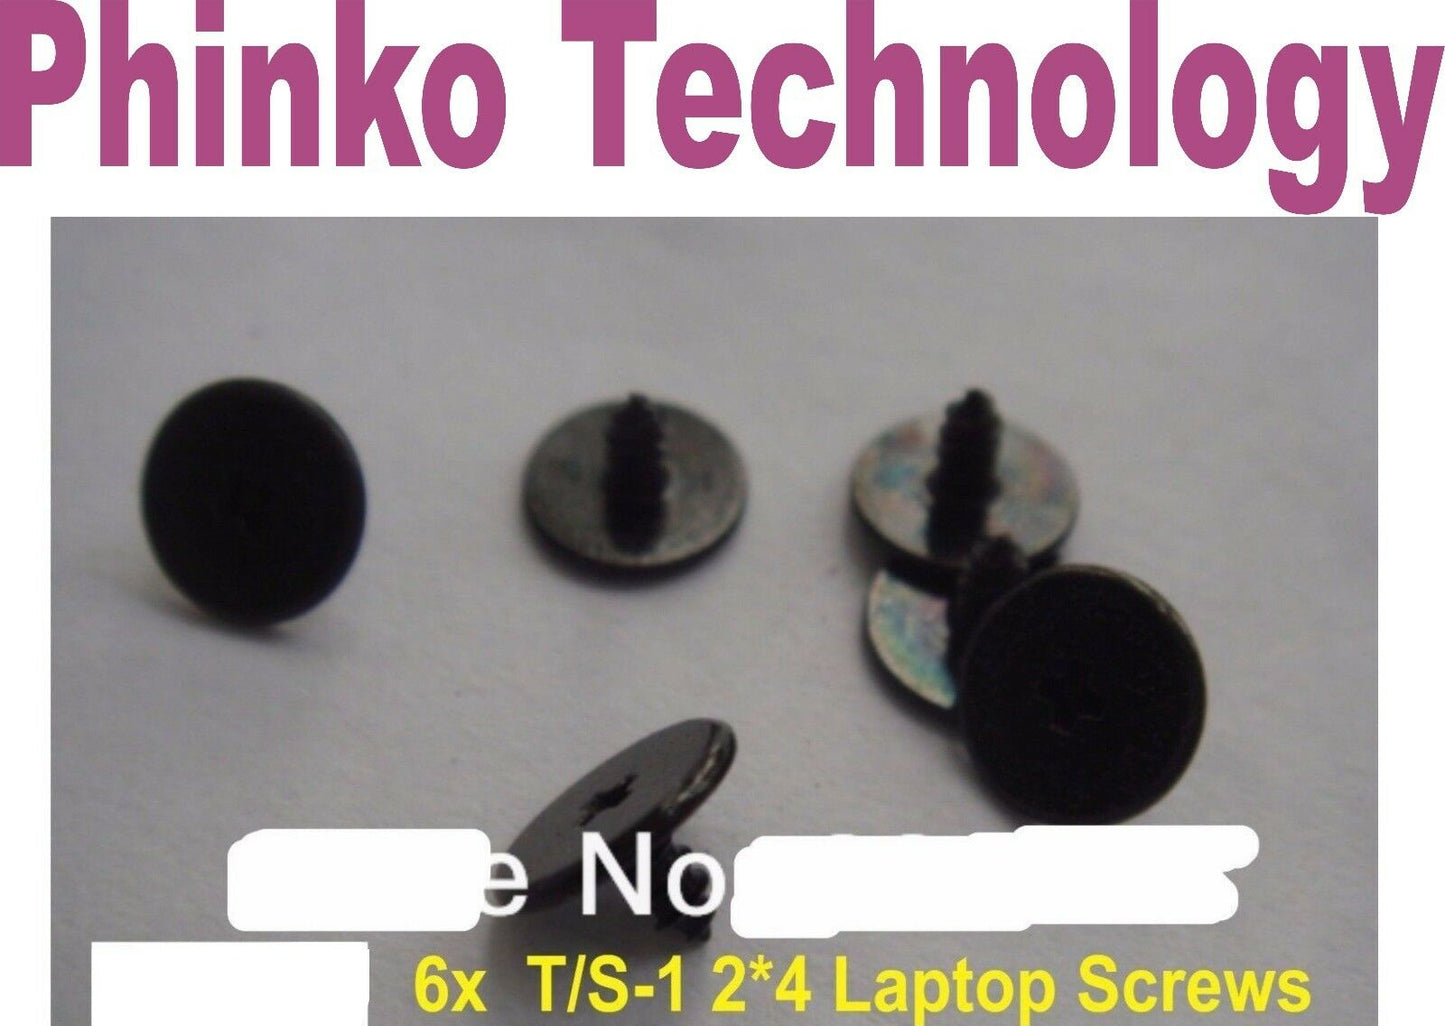 6x T/S-1 2*4 Laptop Screws For IBM Toshiba Sony Dell Samsung Lenovo asus